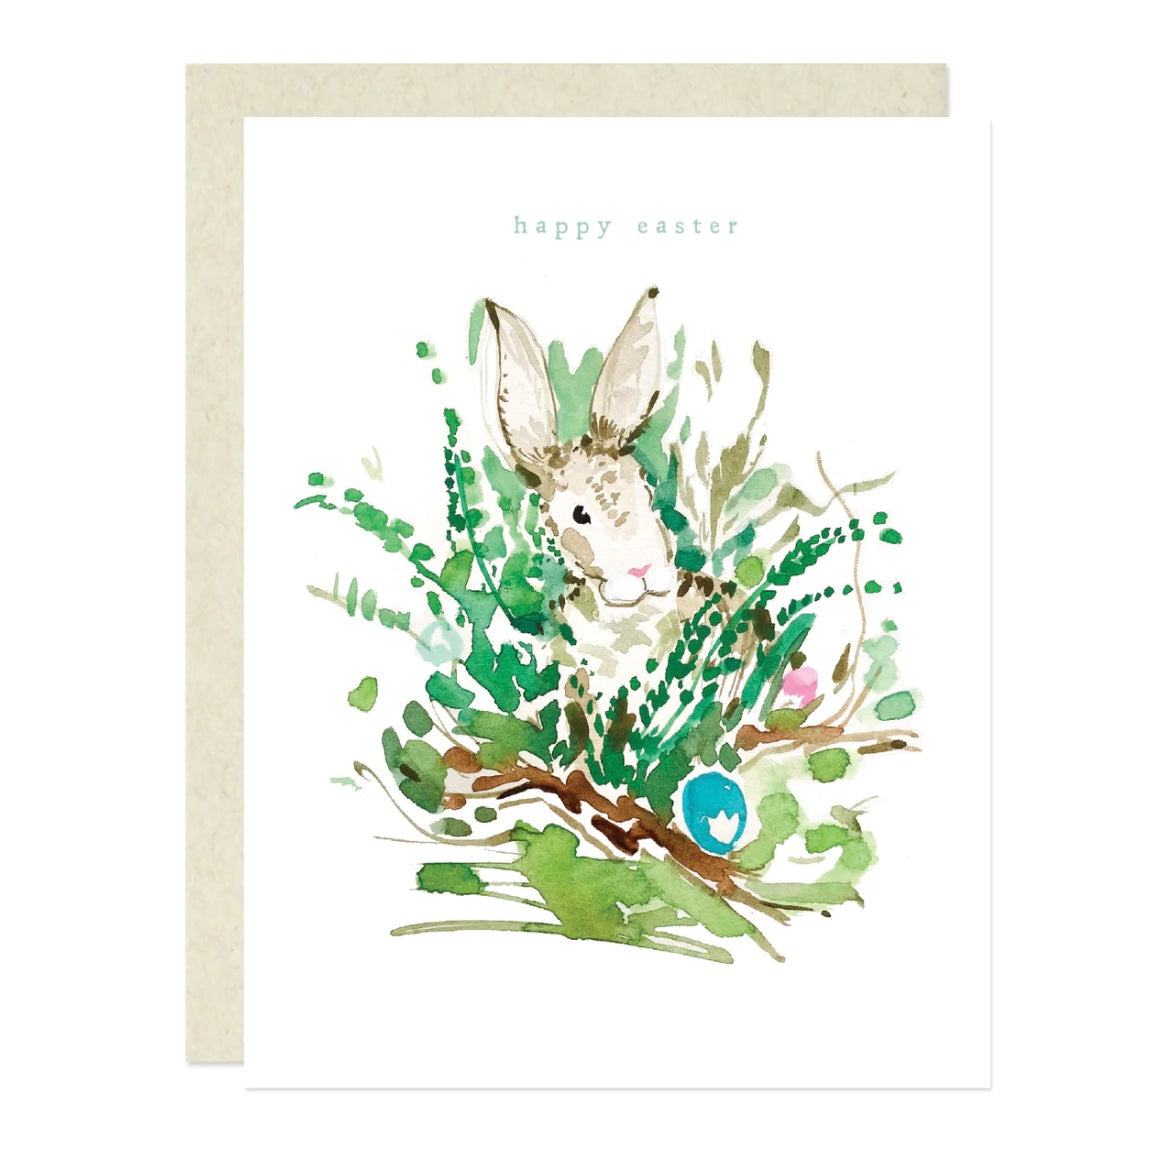 Easter Bunny Card